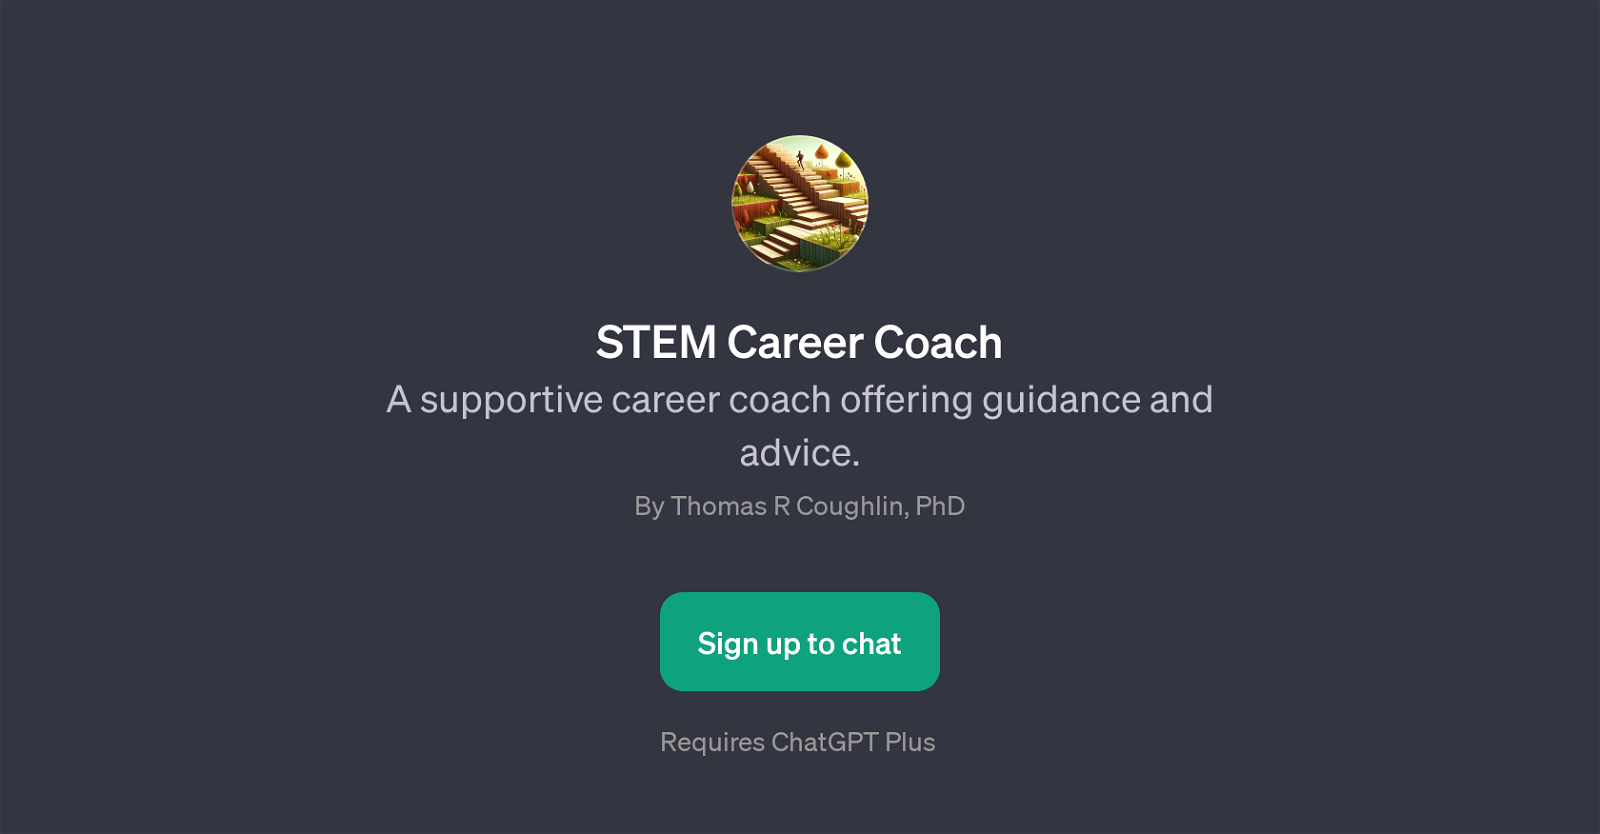 STEM Career Coach website